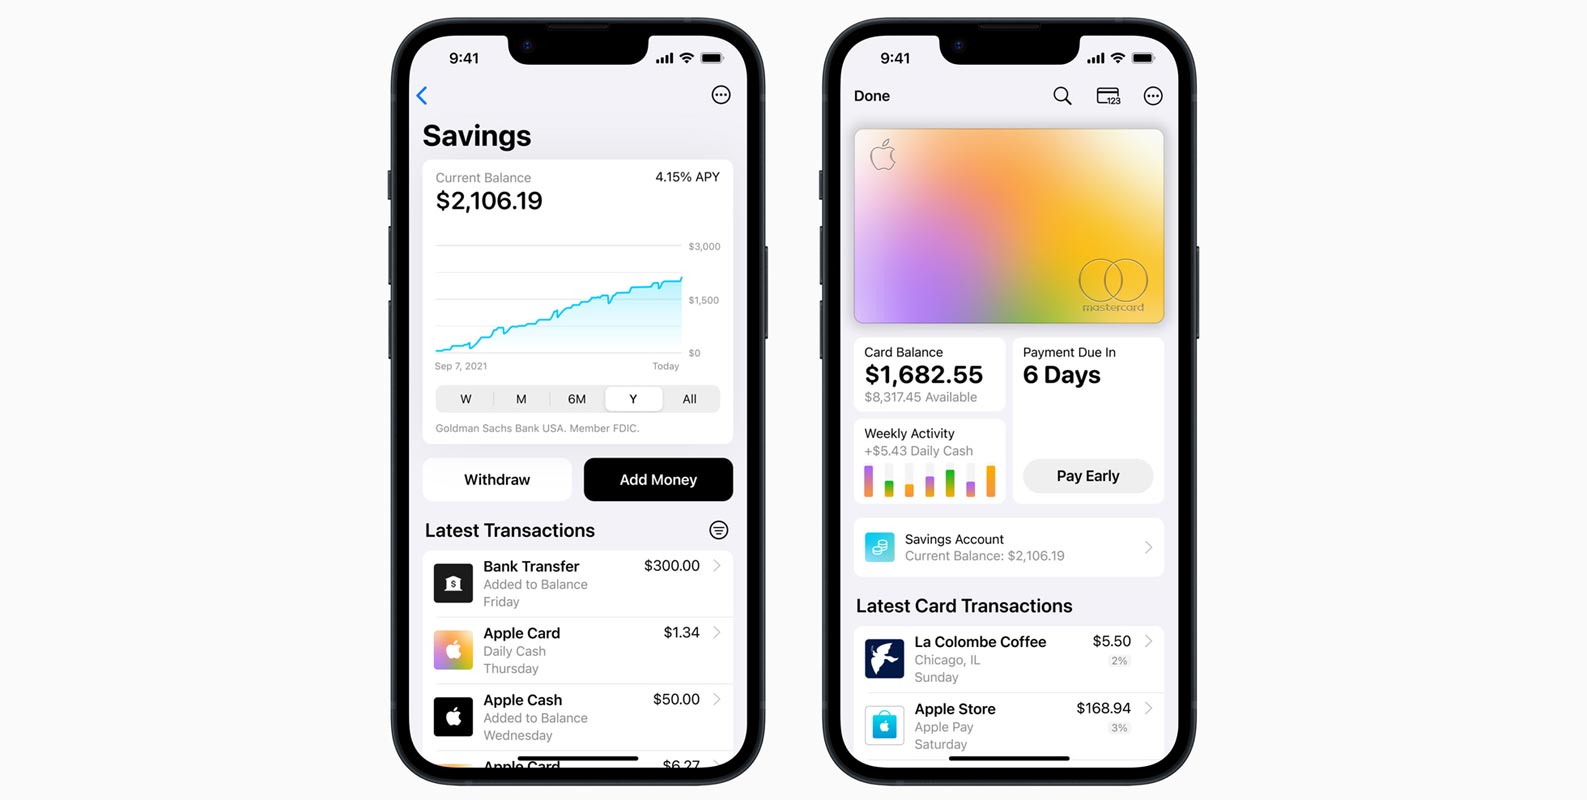 Apple Card Holders Savings Account Screenshot